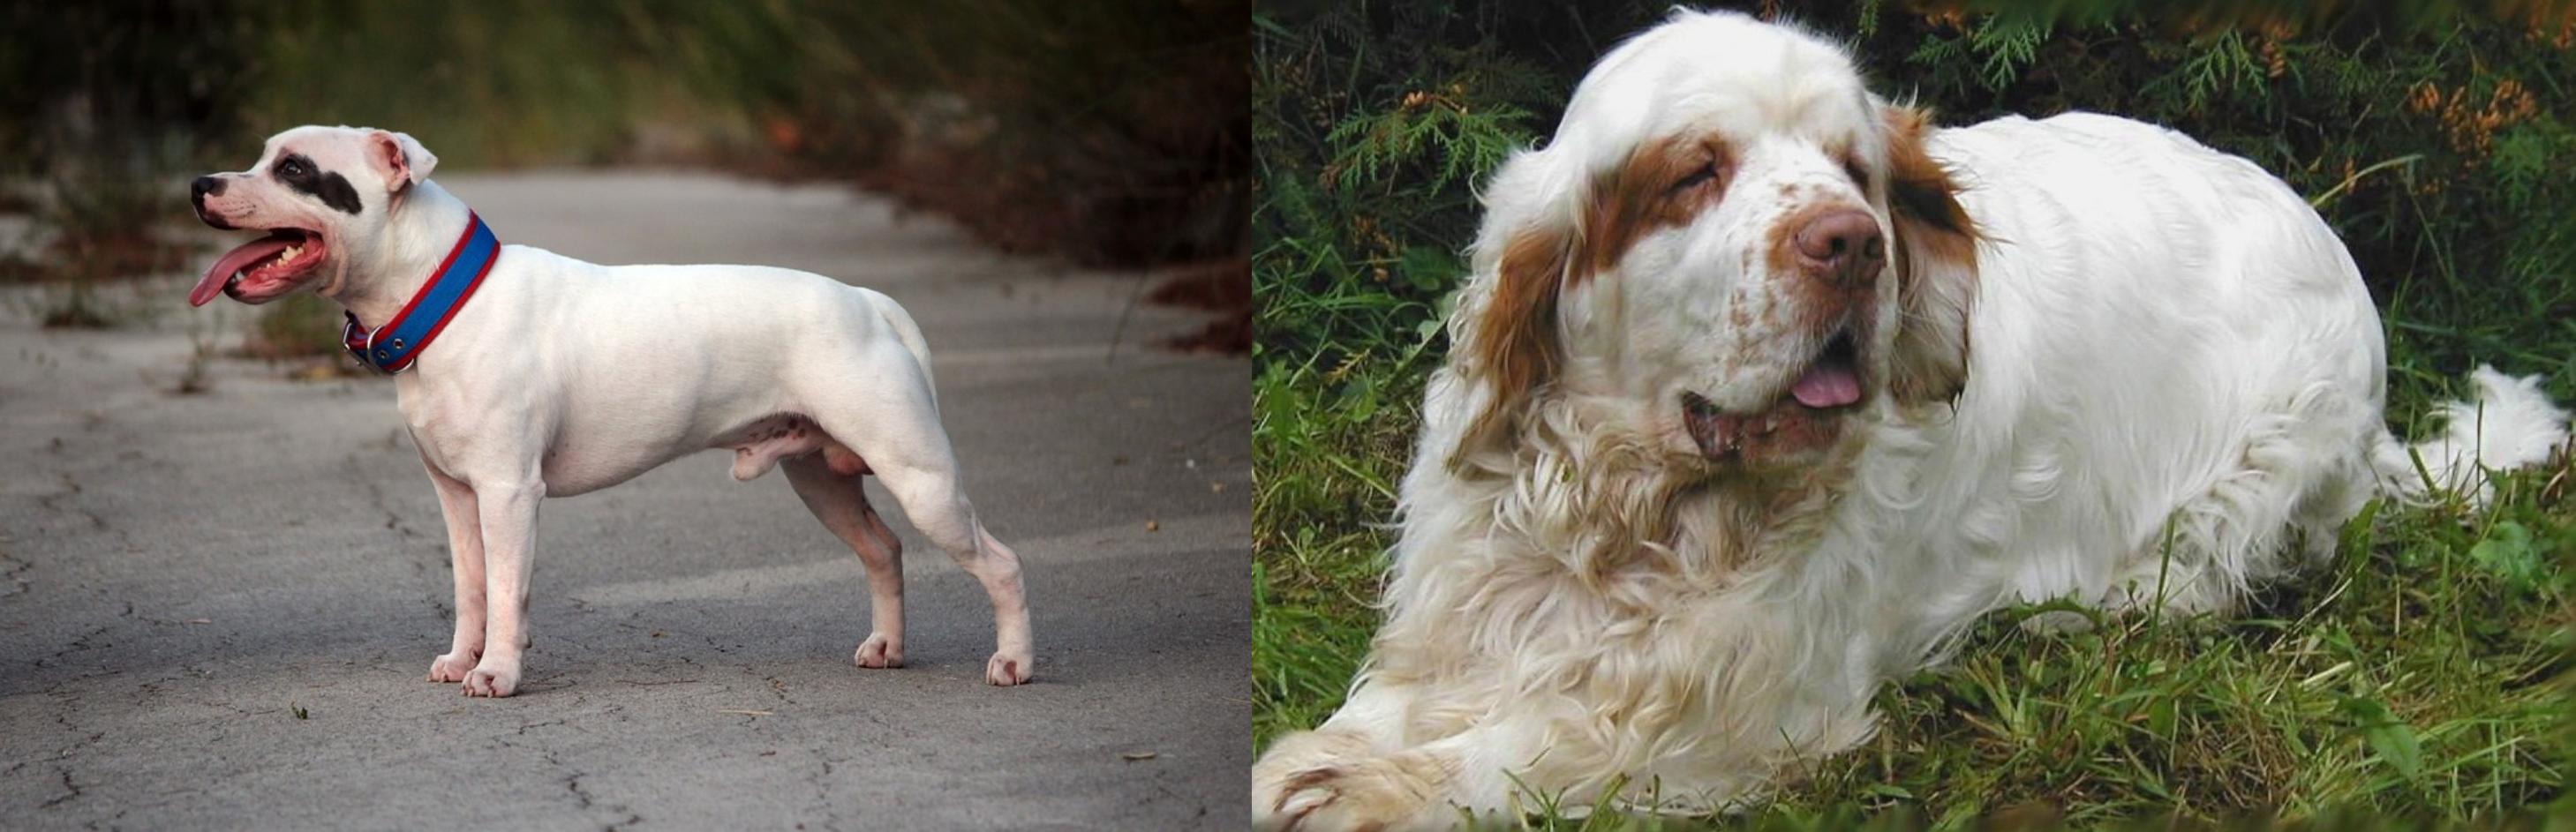 Staffordshire Bull Terrier Vs Clumber Spaniel Breed Comparison